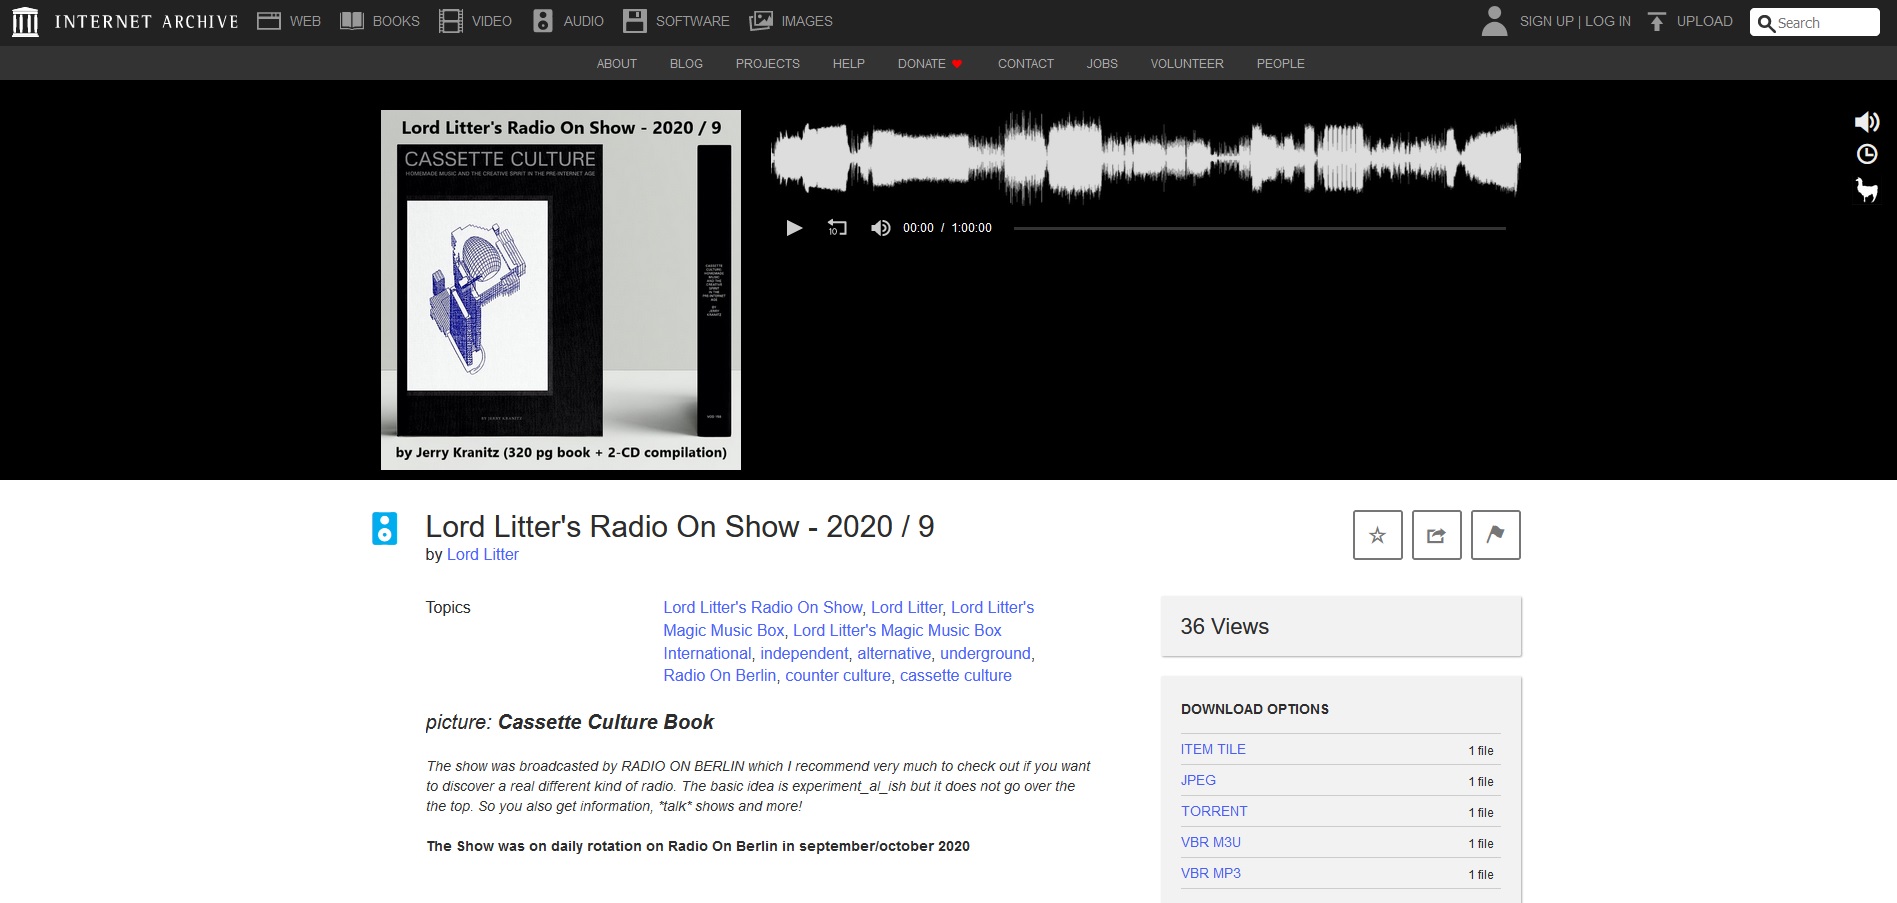 Radio: Lord Litter's Radio On Show - 2020 / 9